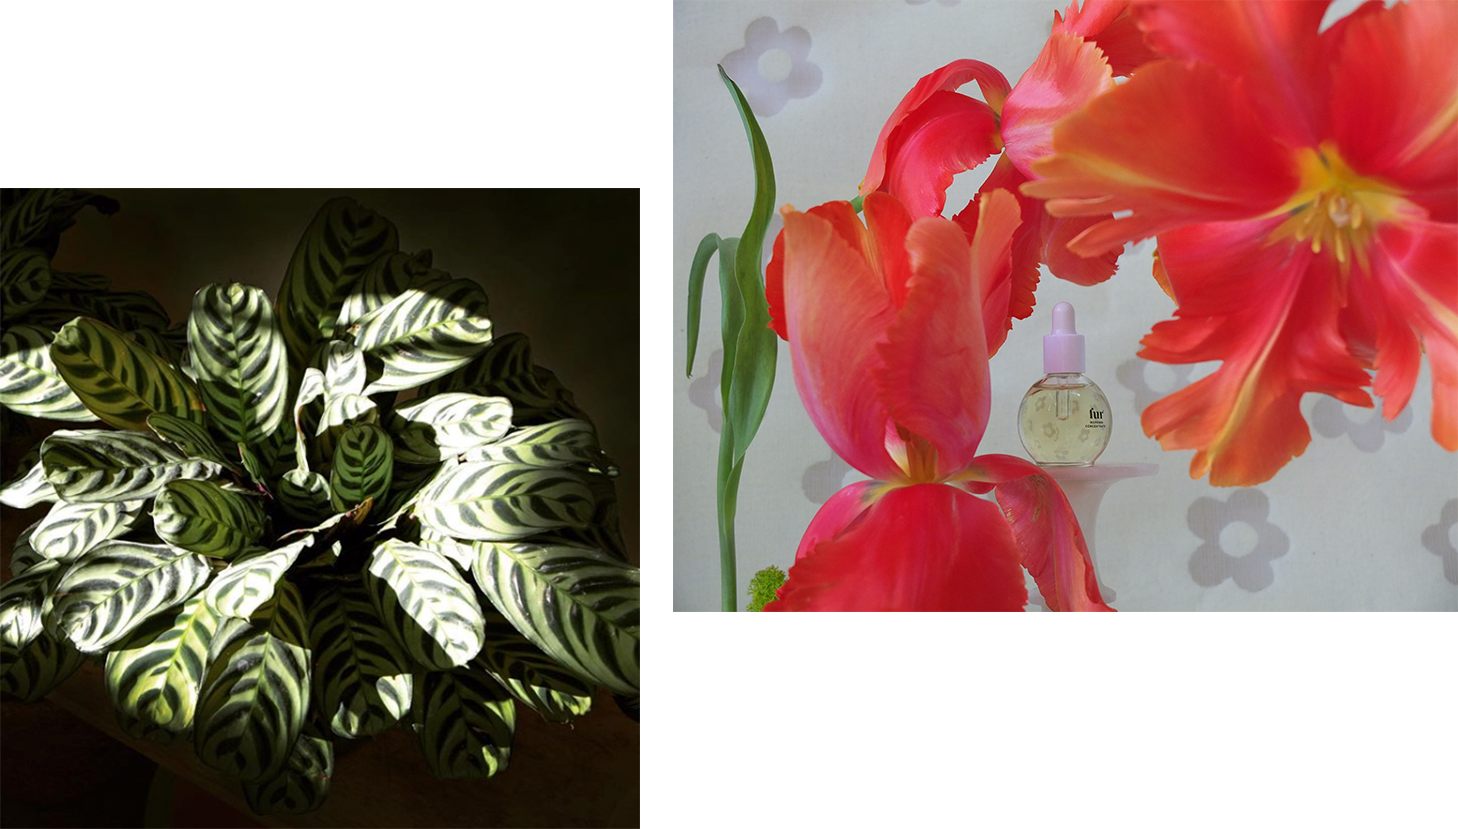 Floral arrangement by Jamie McCuaig, accompanied by a photo of a Calathea.